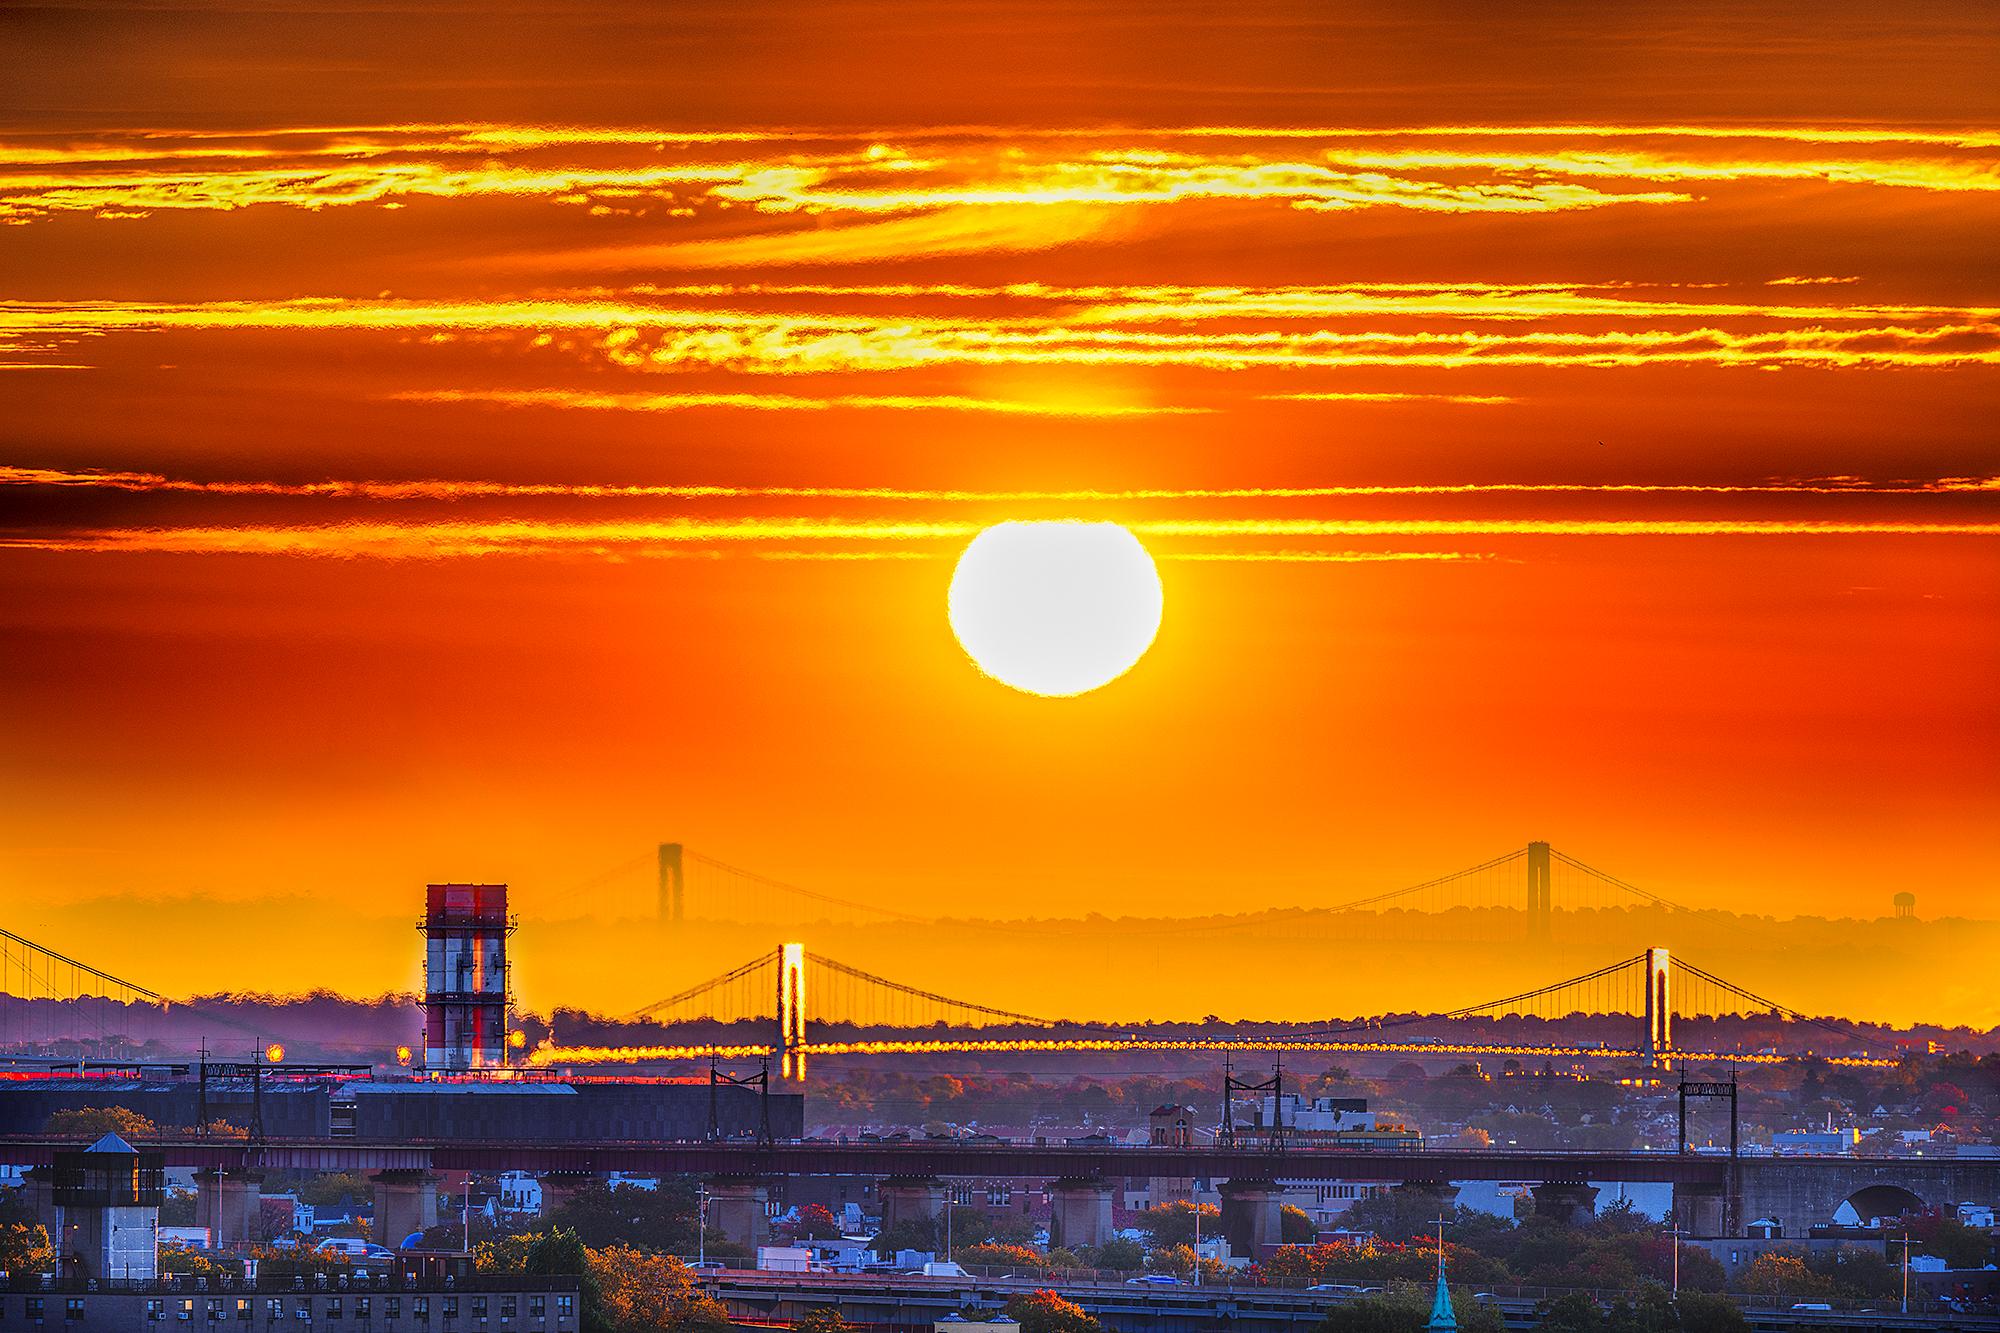 Landscape Photograph Mitchell Funk - The Bridges of New York City at Sunset Vibrant Orange